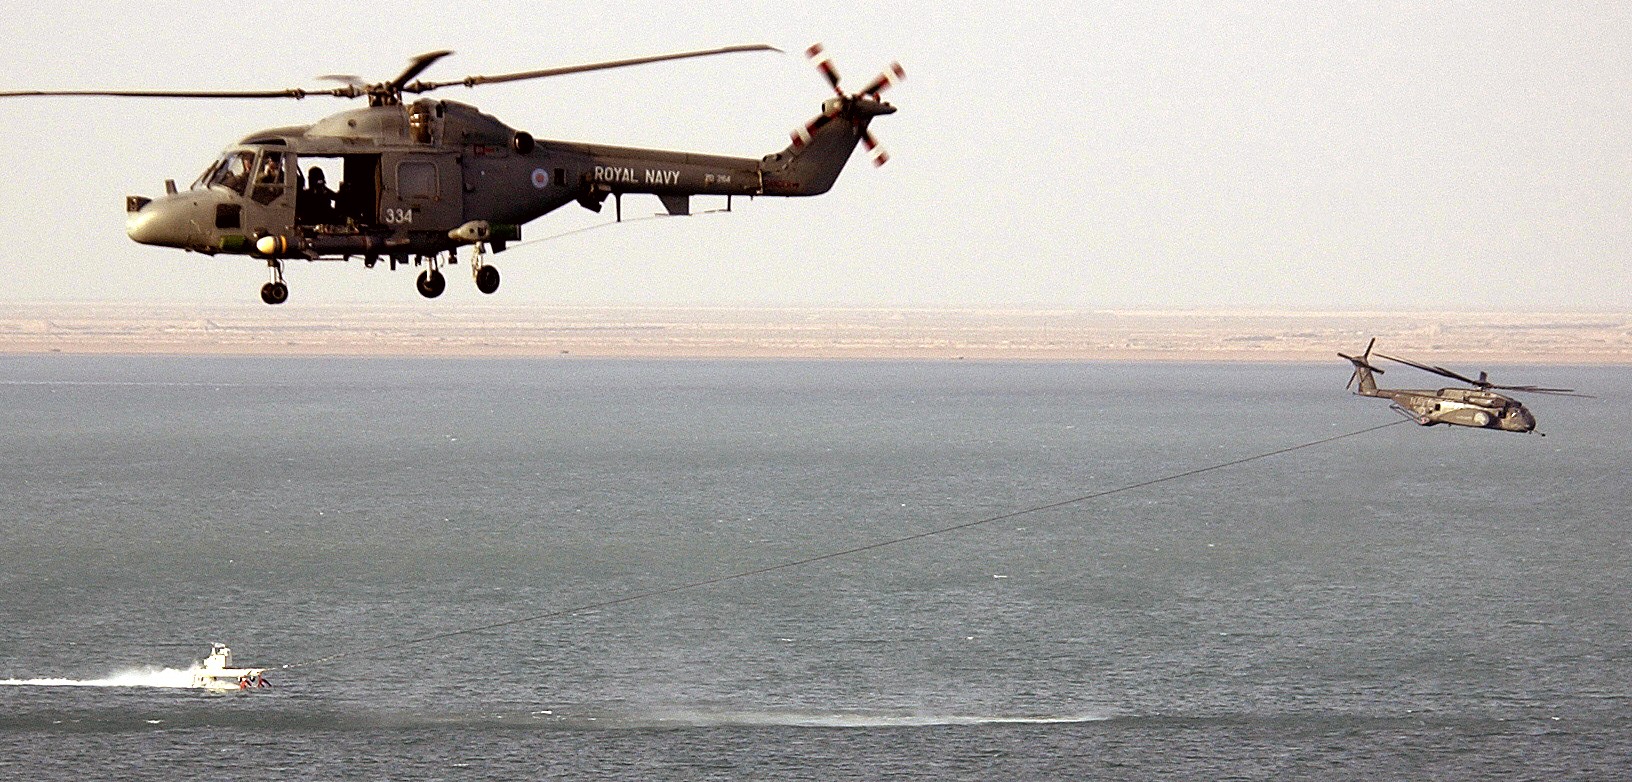 hm-14 vanguard helicopter mine countermeasures squadron navy mh-53e sea dragon 52 arabian gulf 2003